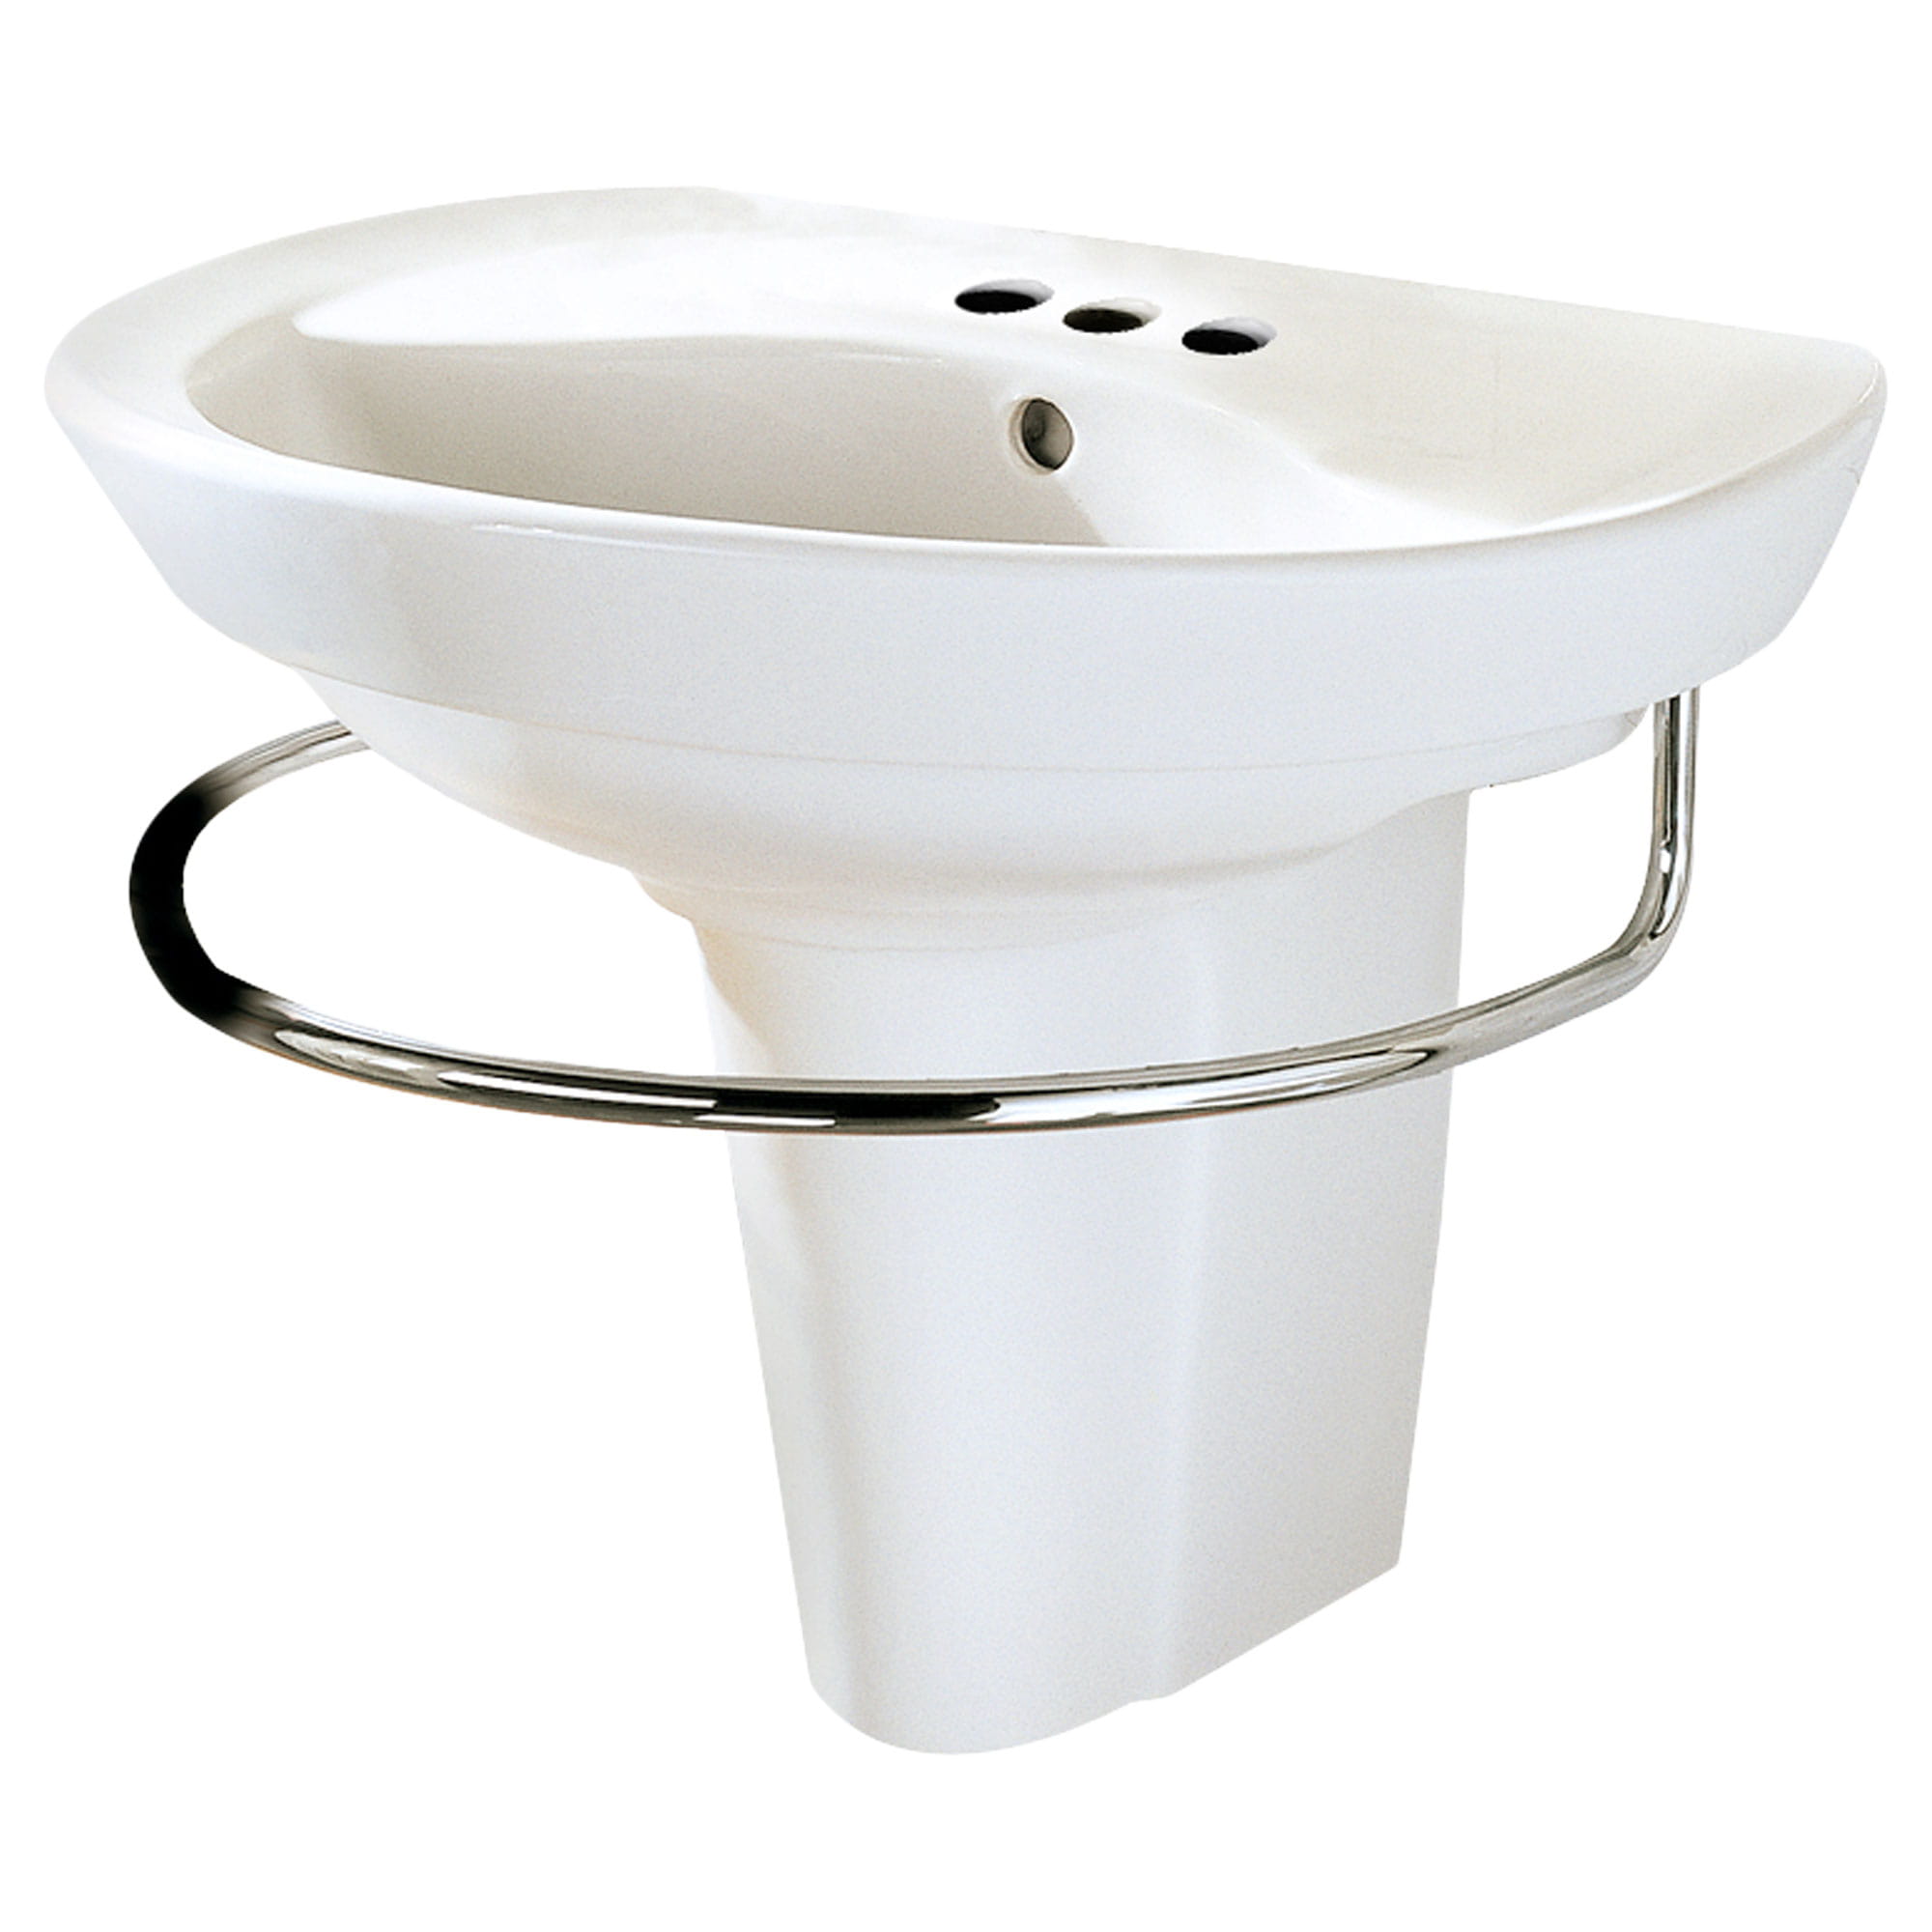 Ravenna® 4-Inch Centerset Pedestal Sink Top and Leg Combination